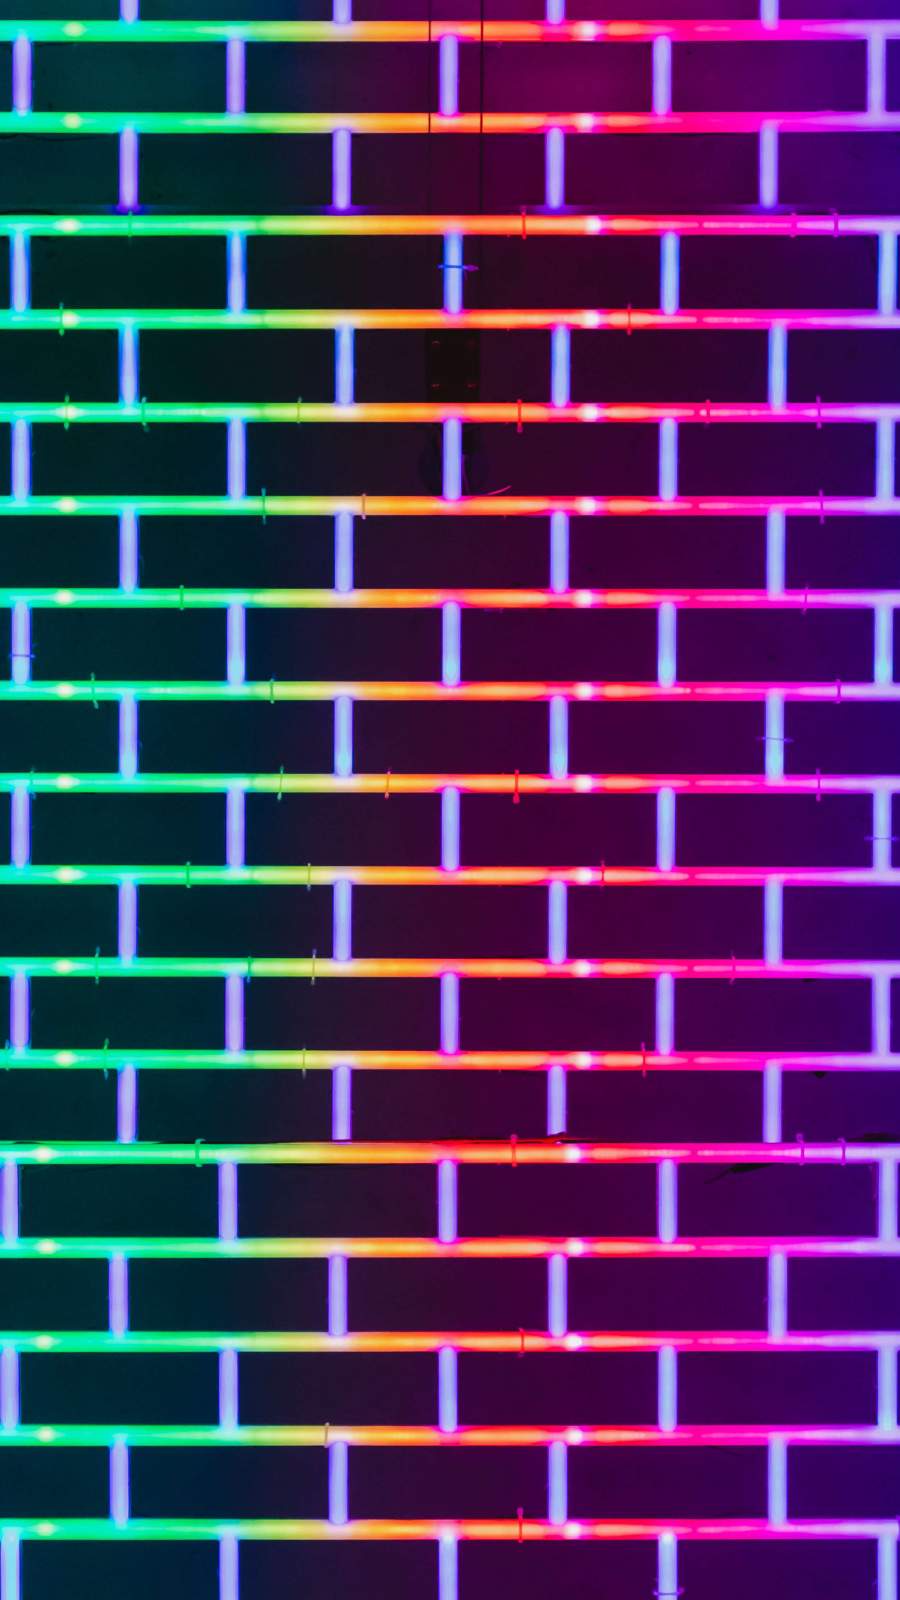 Neon Wall IPhone Wallpaper Wallpaper, iPhone Wallpaper